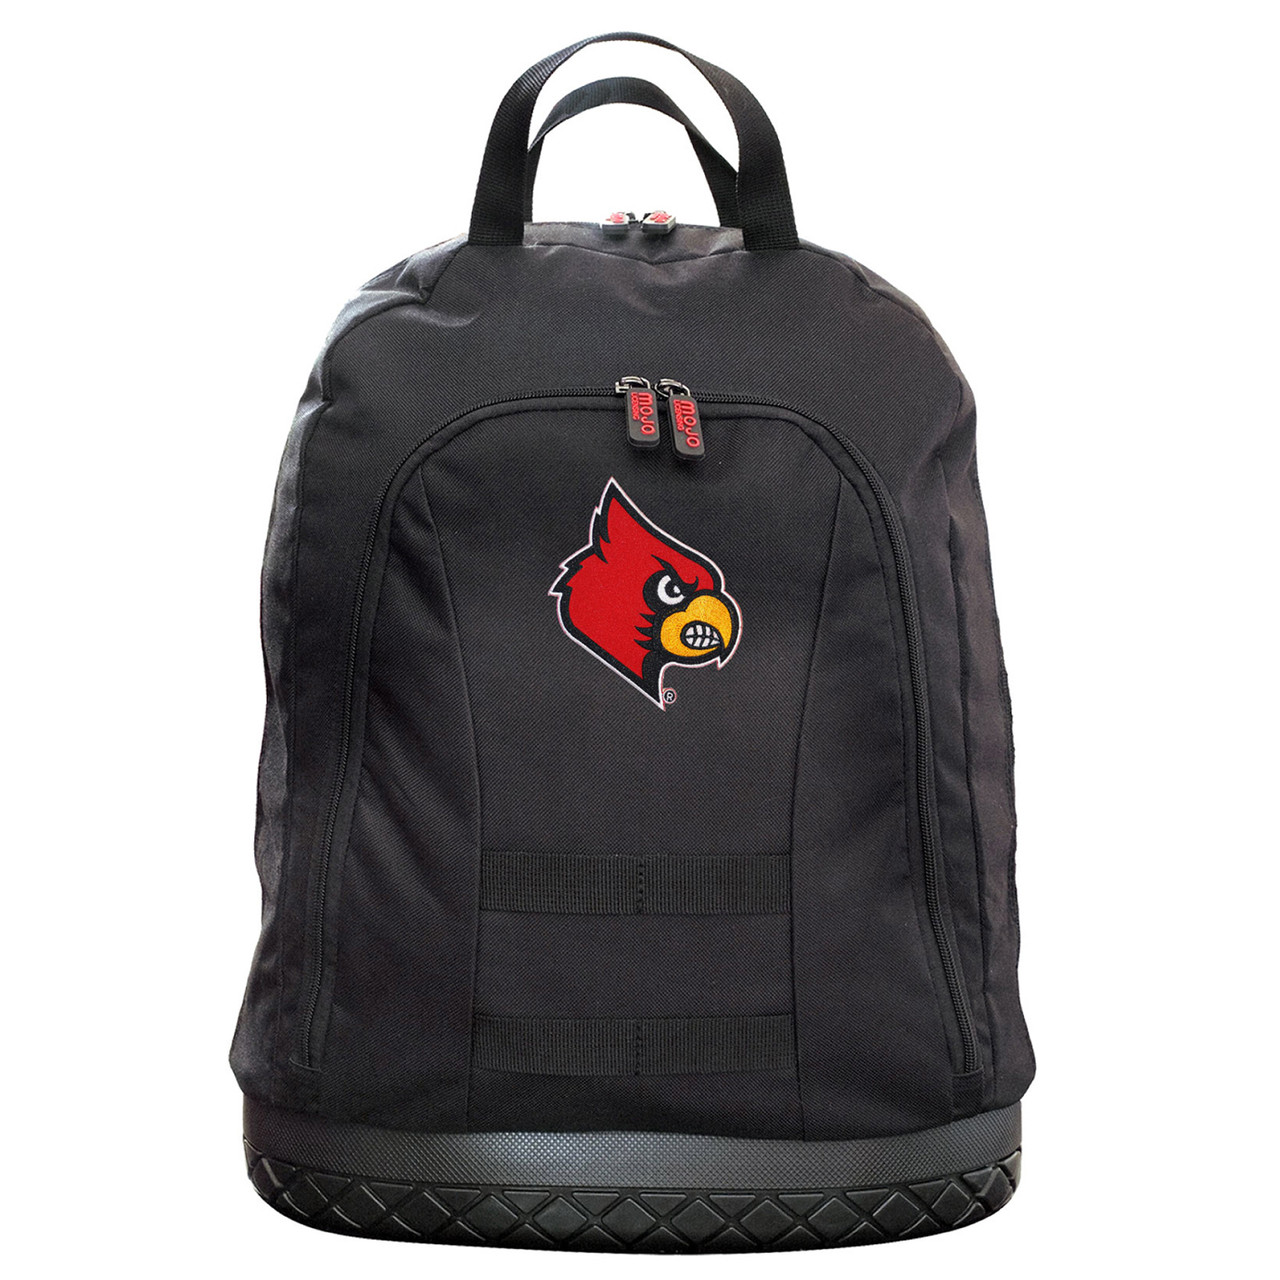 Mojo Louisville Cardinals Wheeled Premium Black Backpack